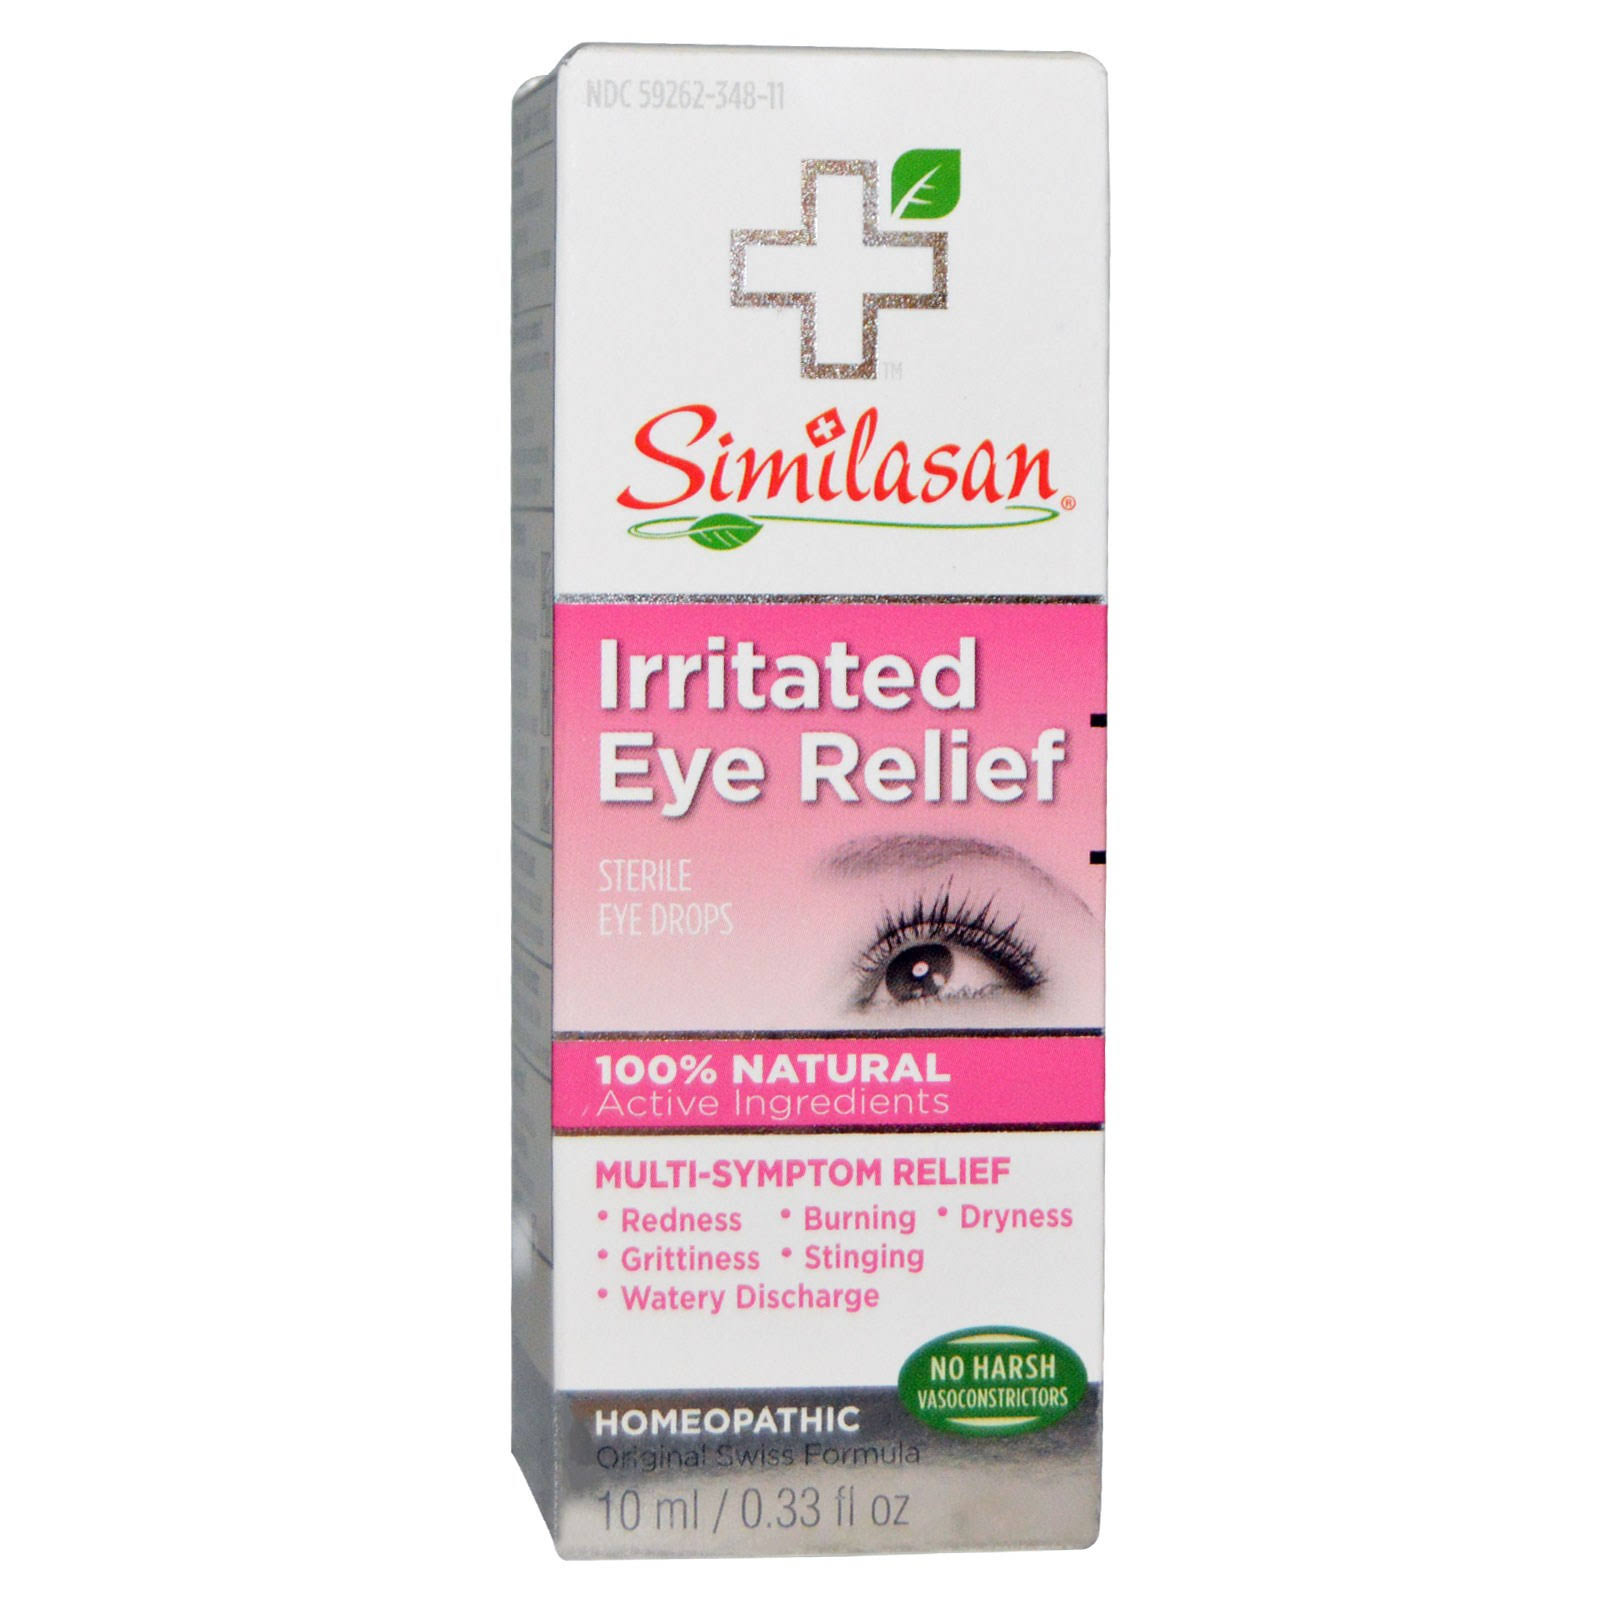 Similasan, Irritated Eye Relief, Sterile Eye Drops, 0.33 FL oz (10 ml)